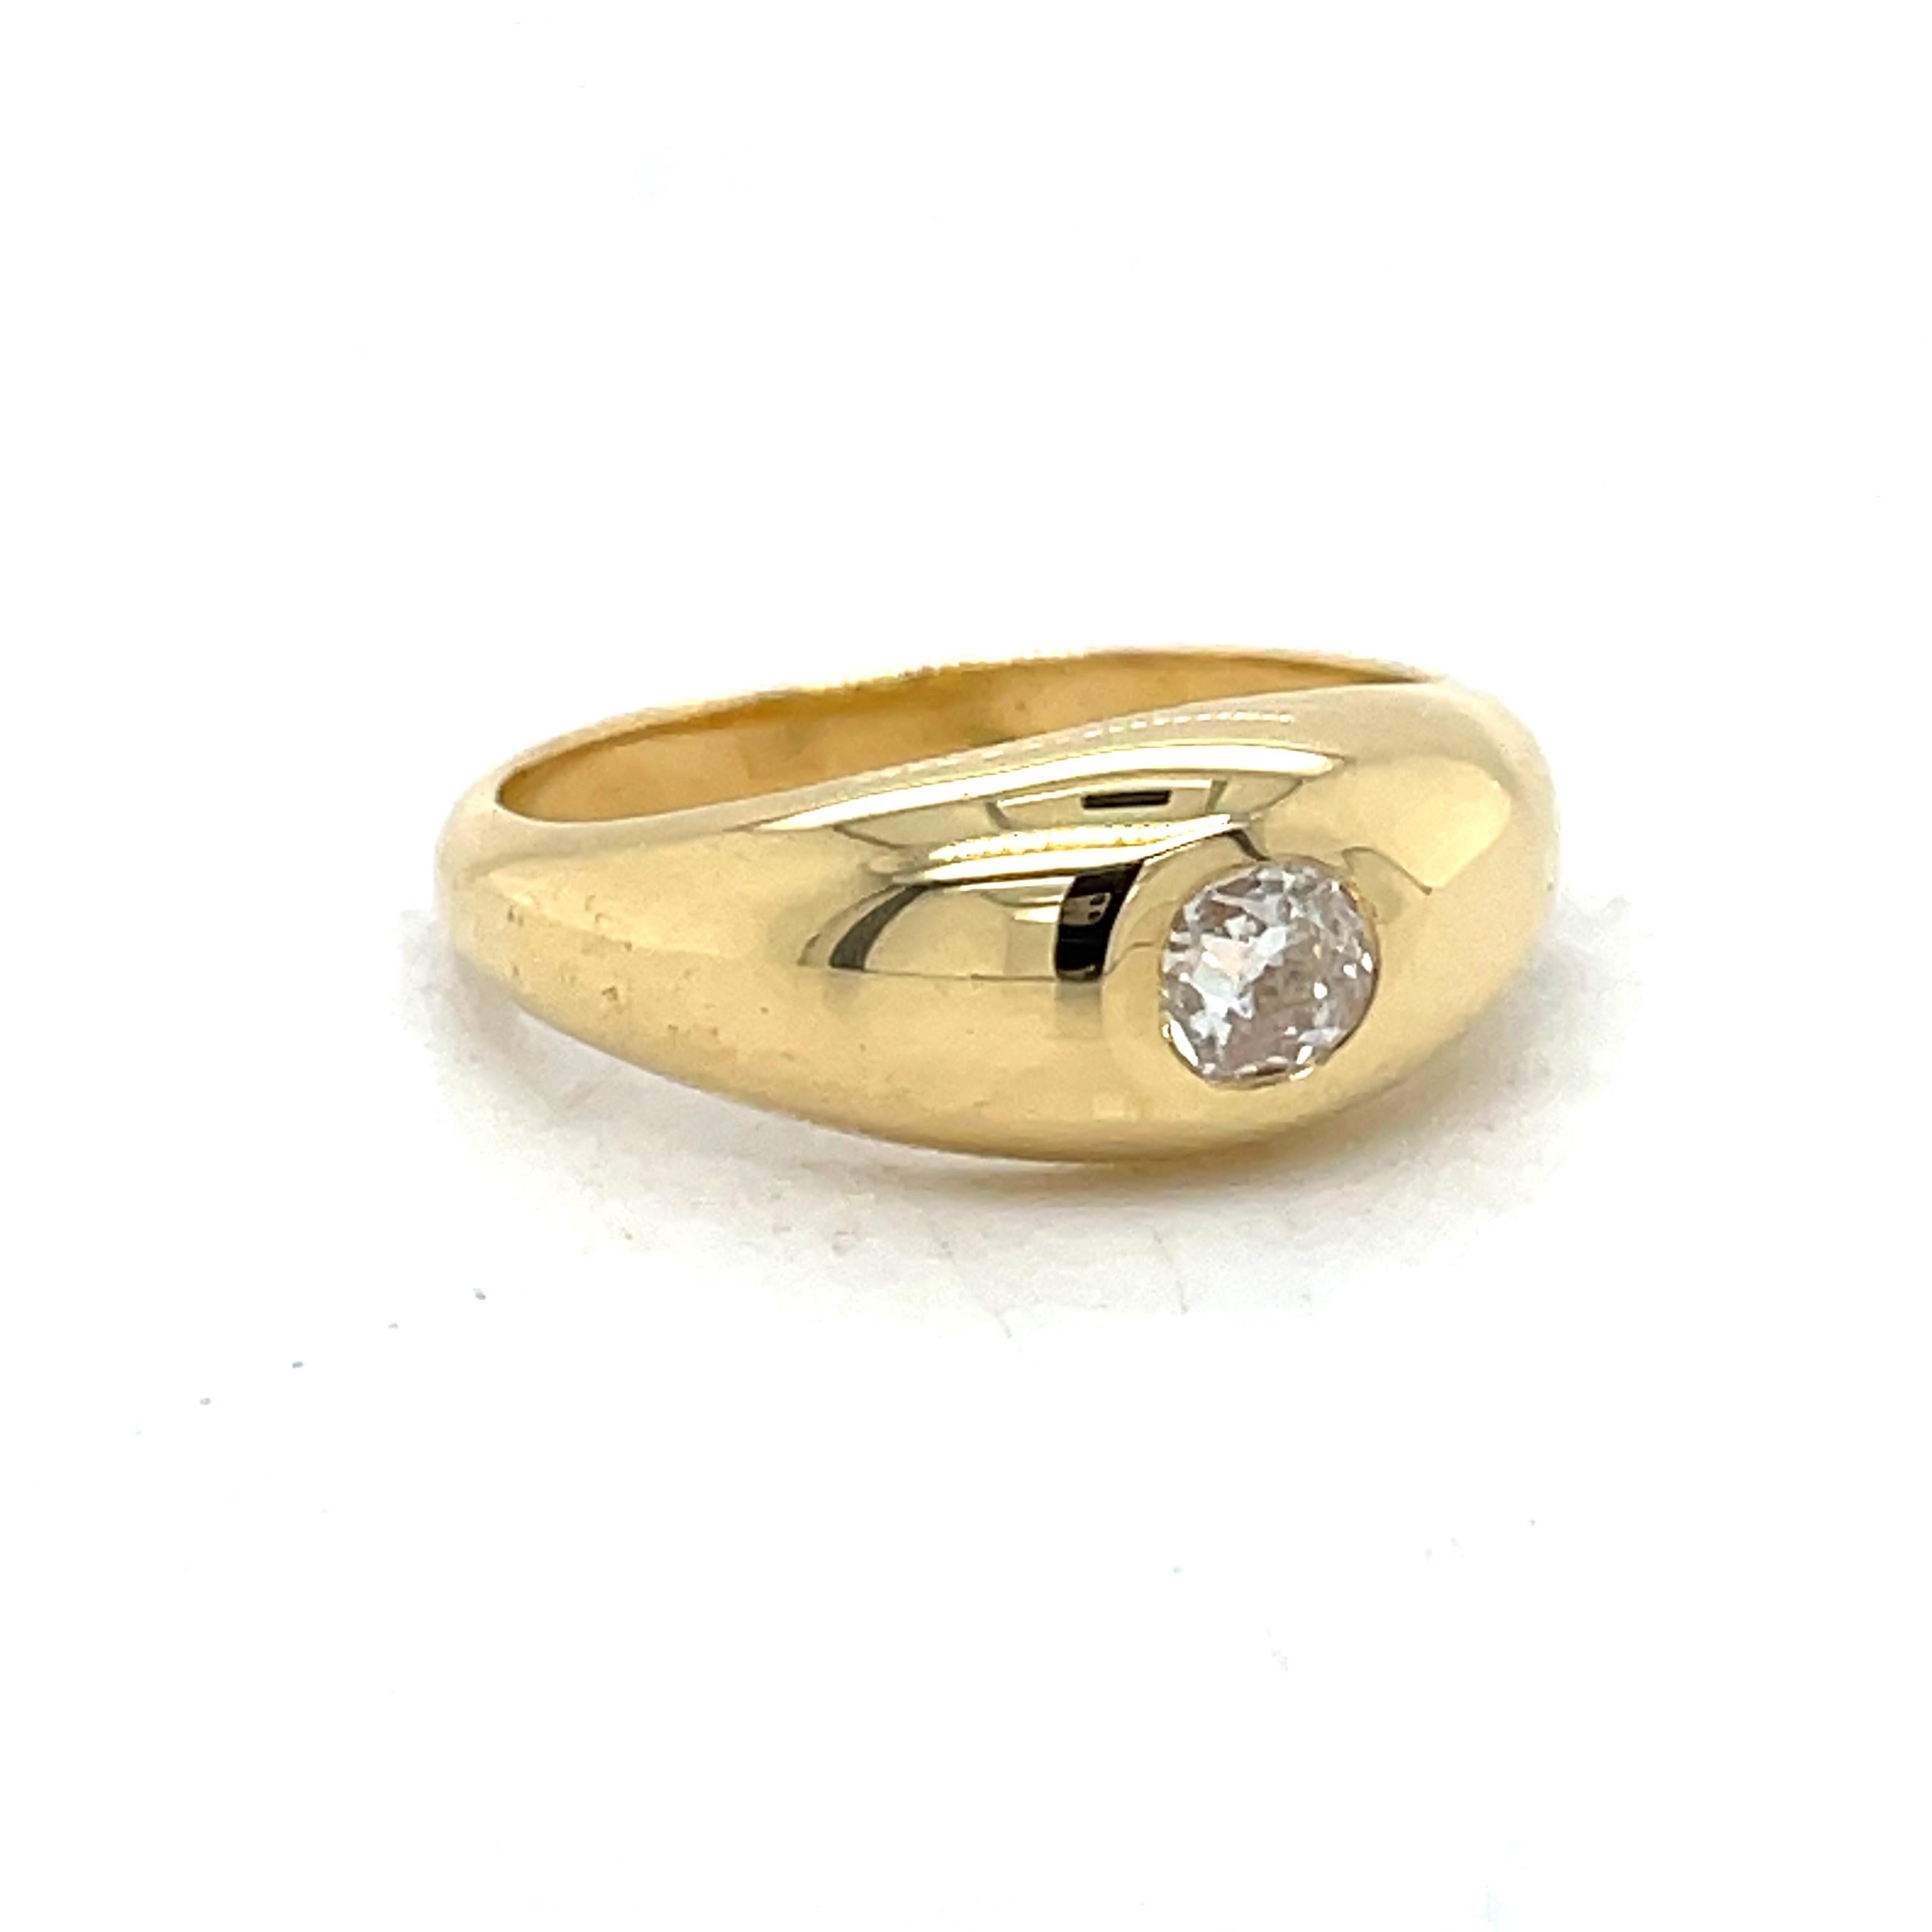 For Sale:  Dome Gold ring, Bezel set, 0.3CT Old Mine Diamond, 18k Gold, vintage stayle ring 4